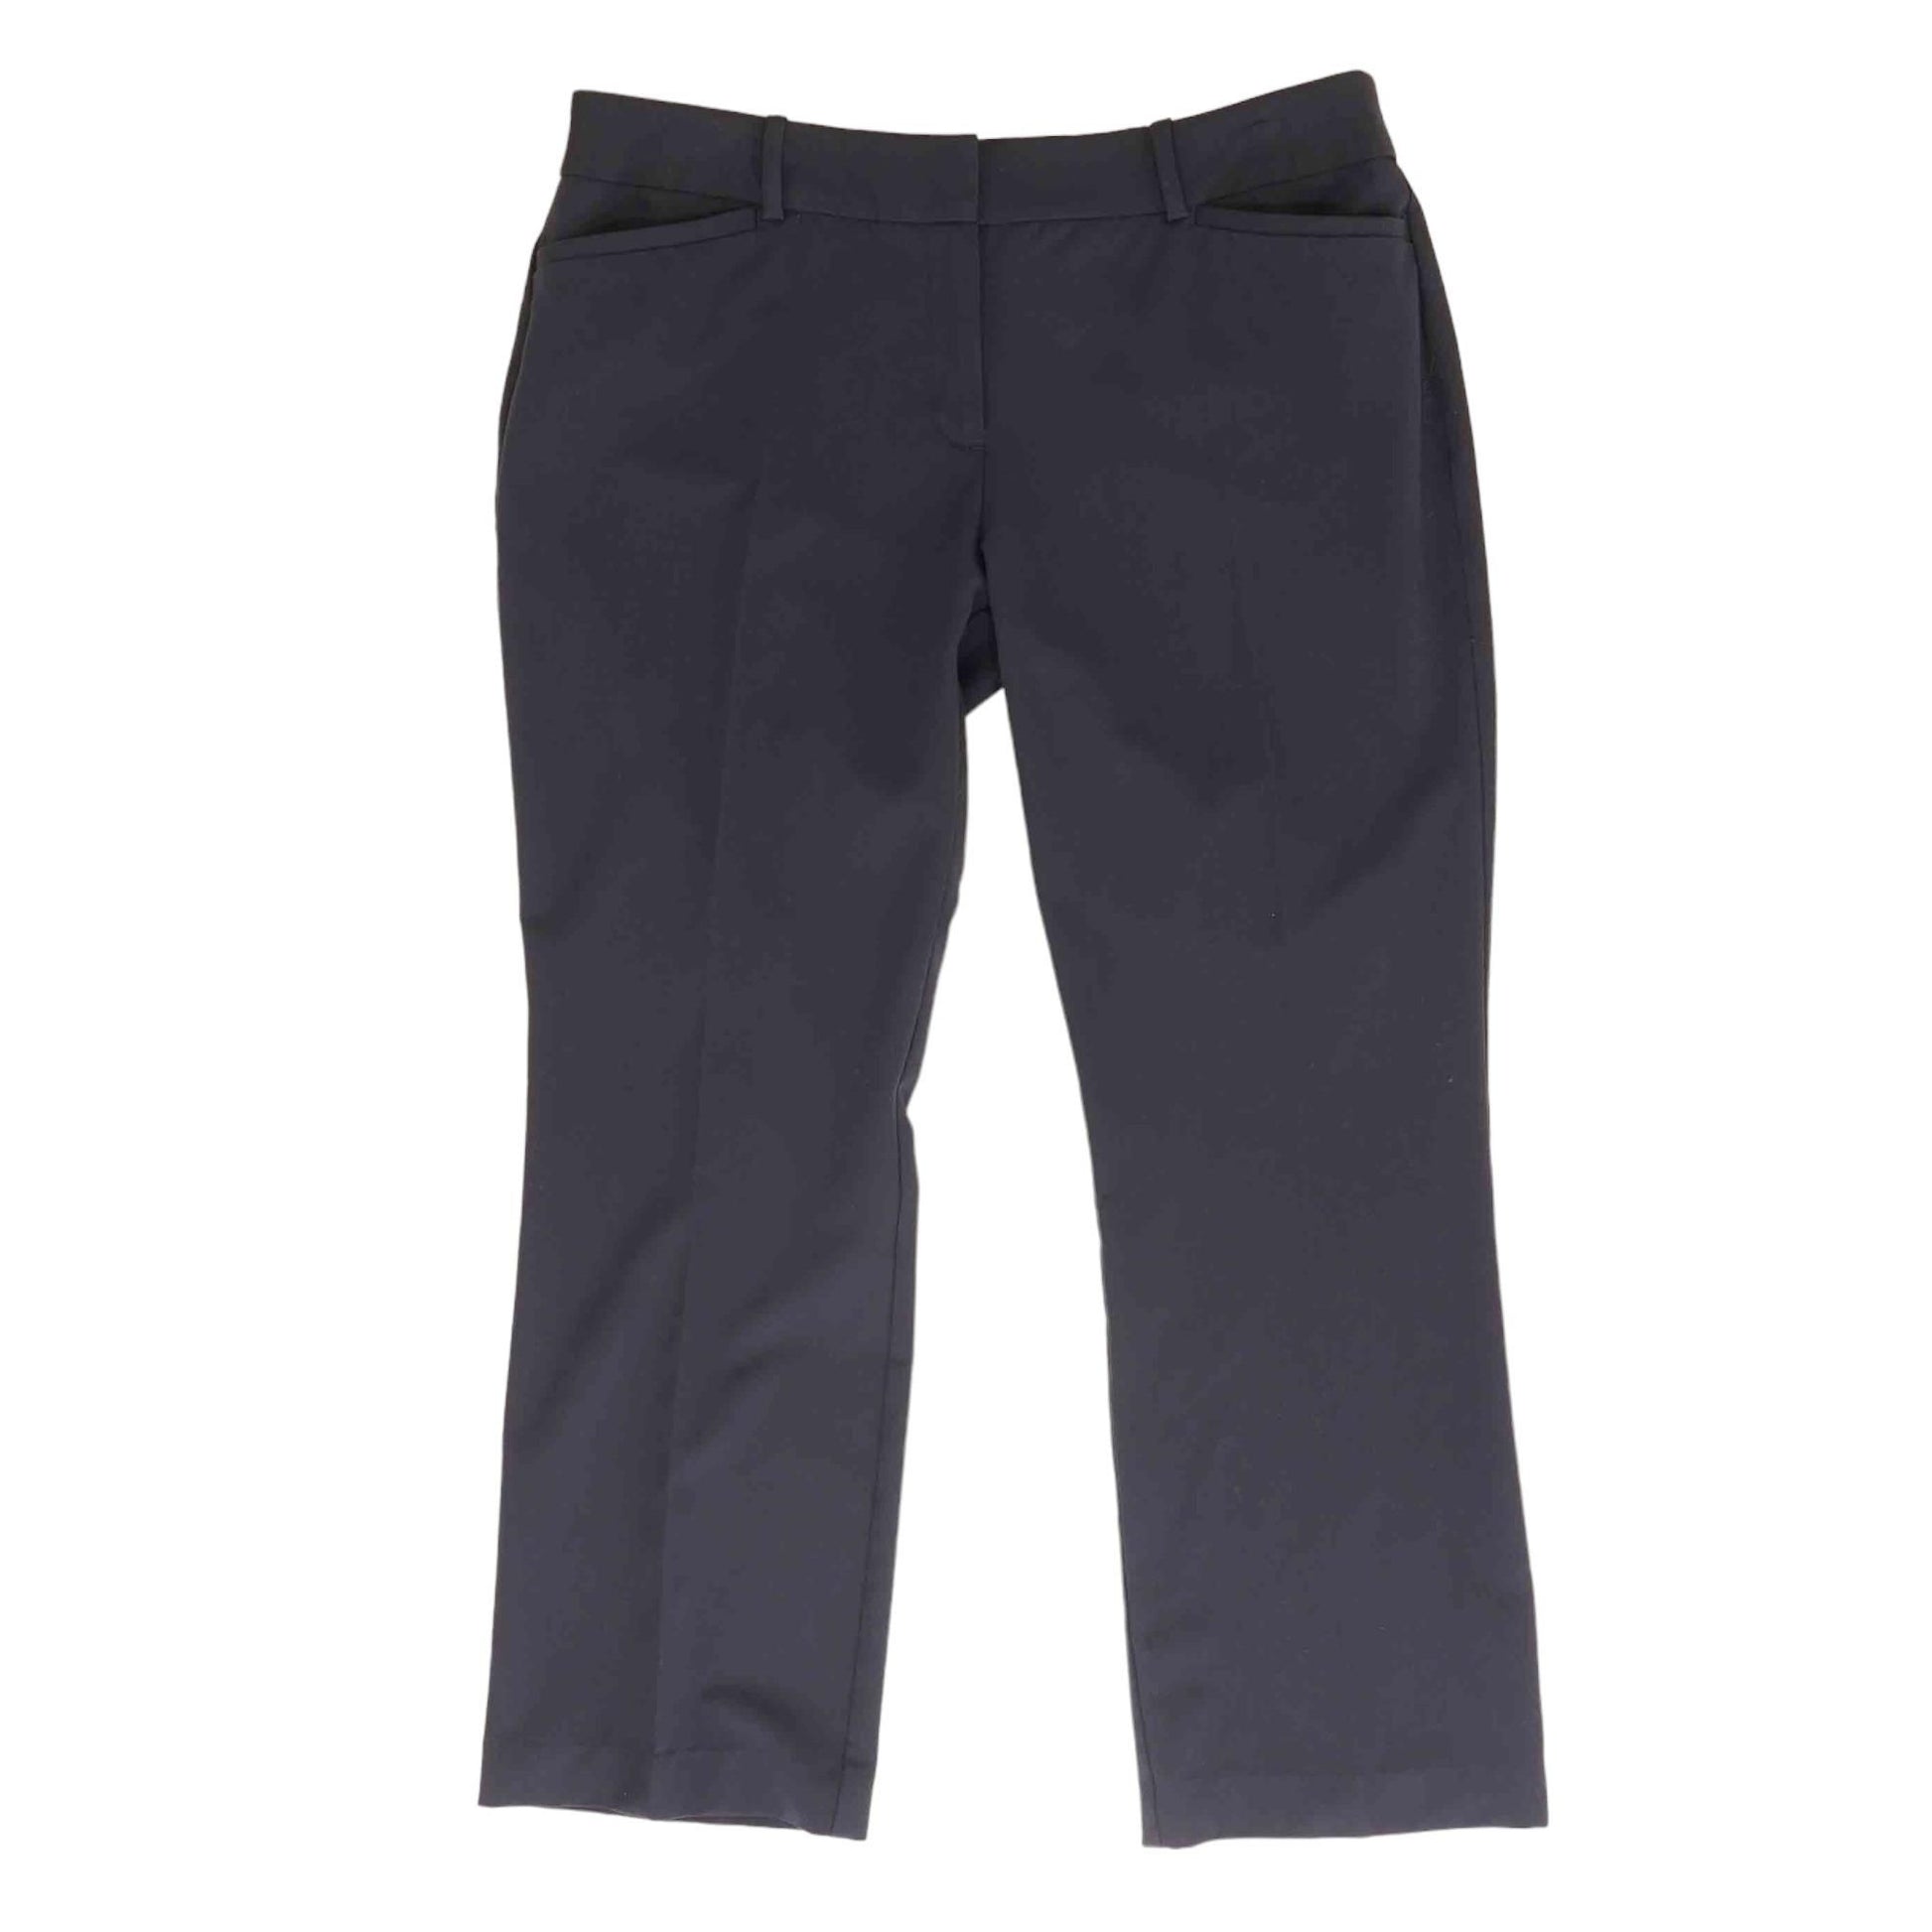 Worthington 3/4 Sleeve Pant Suits for Women